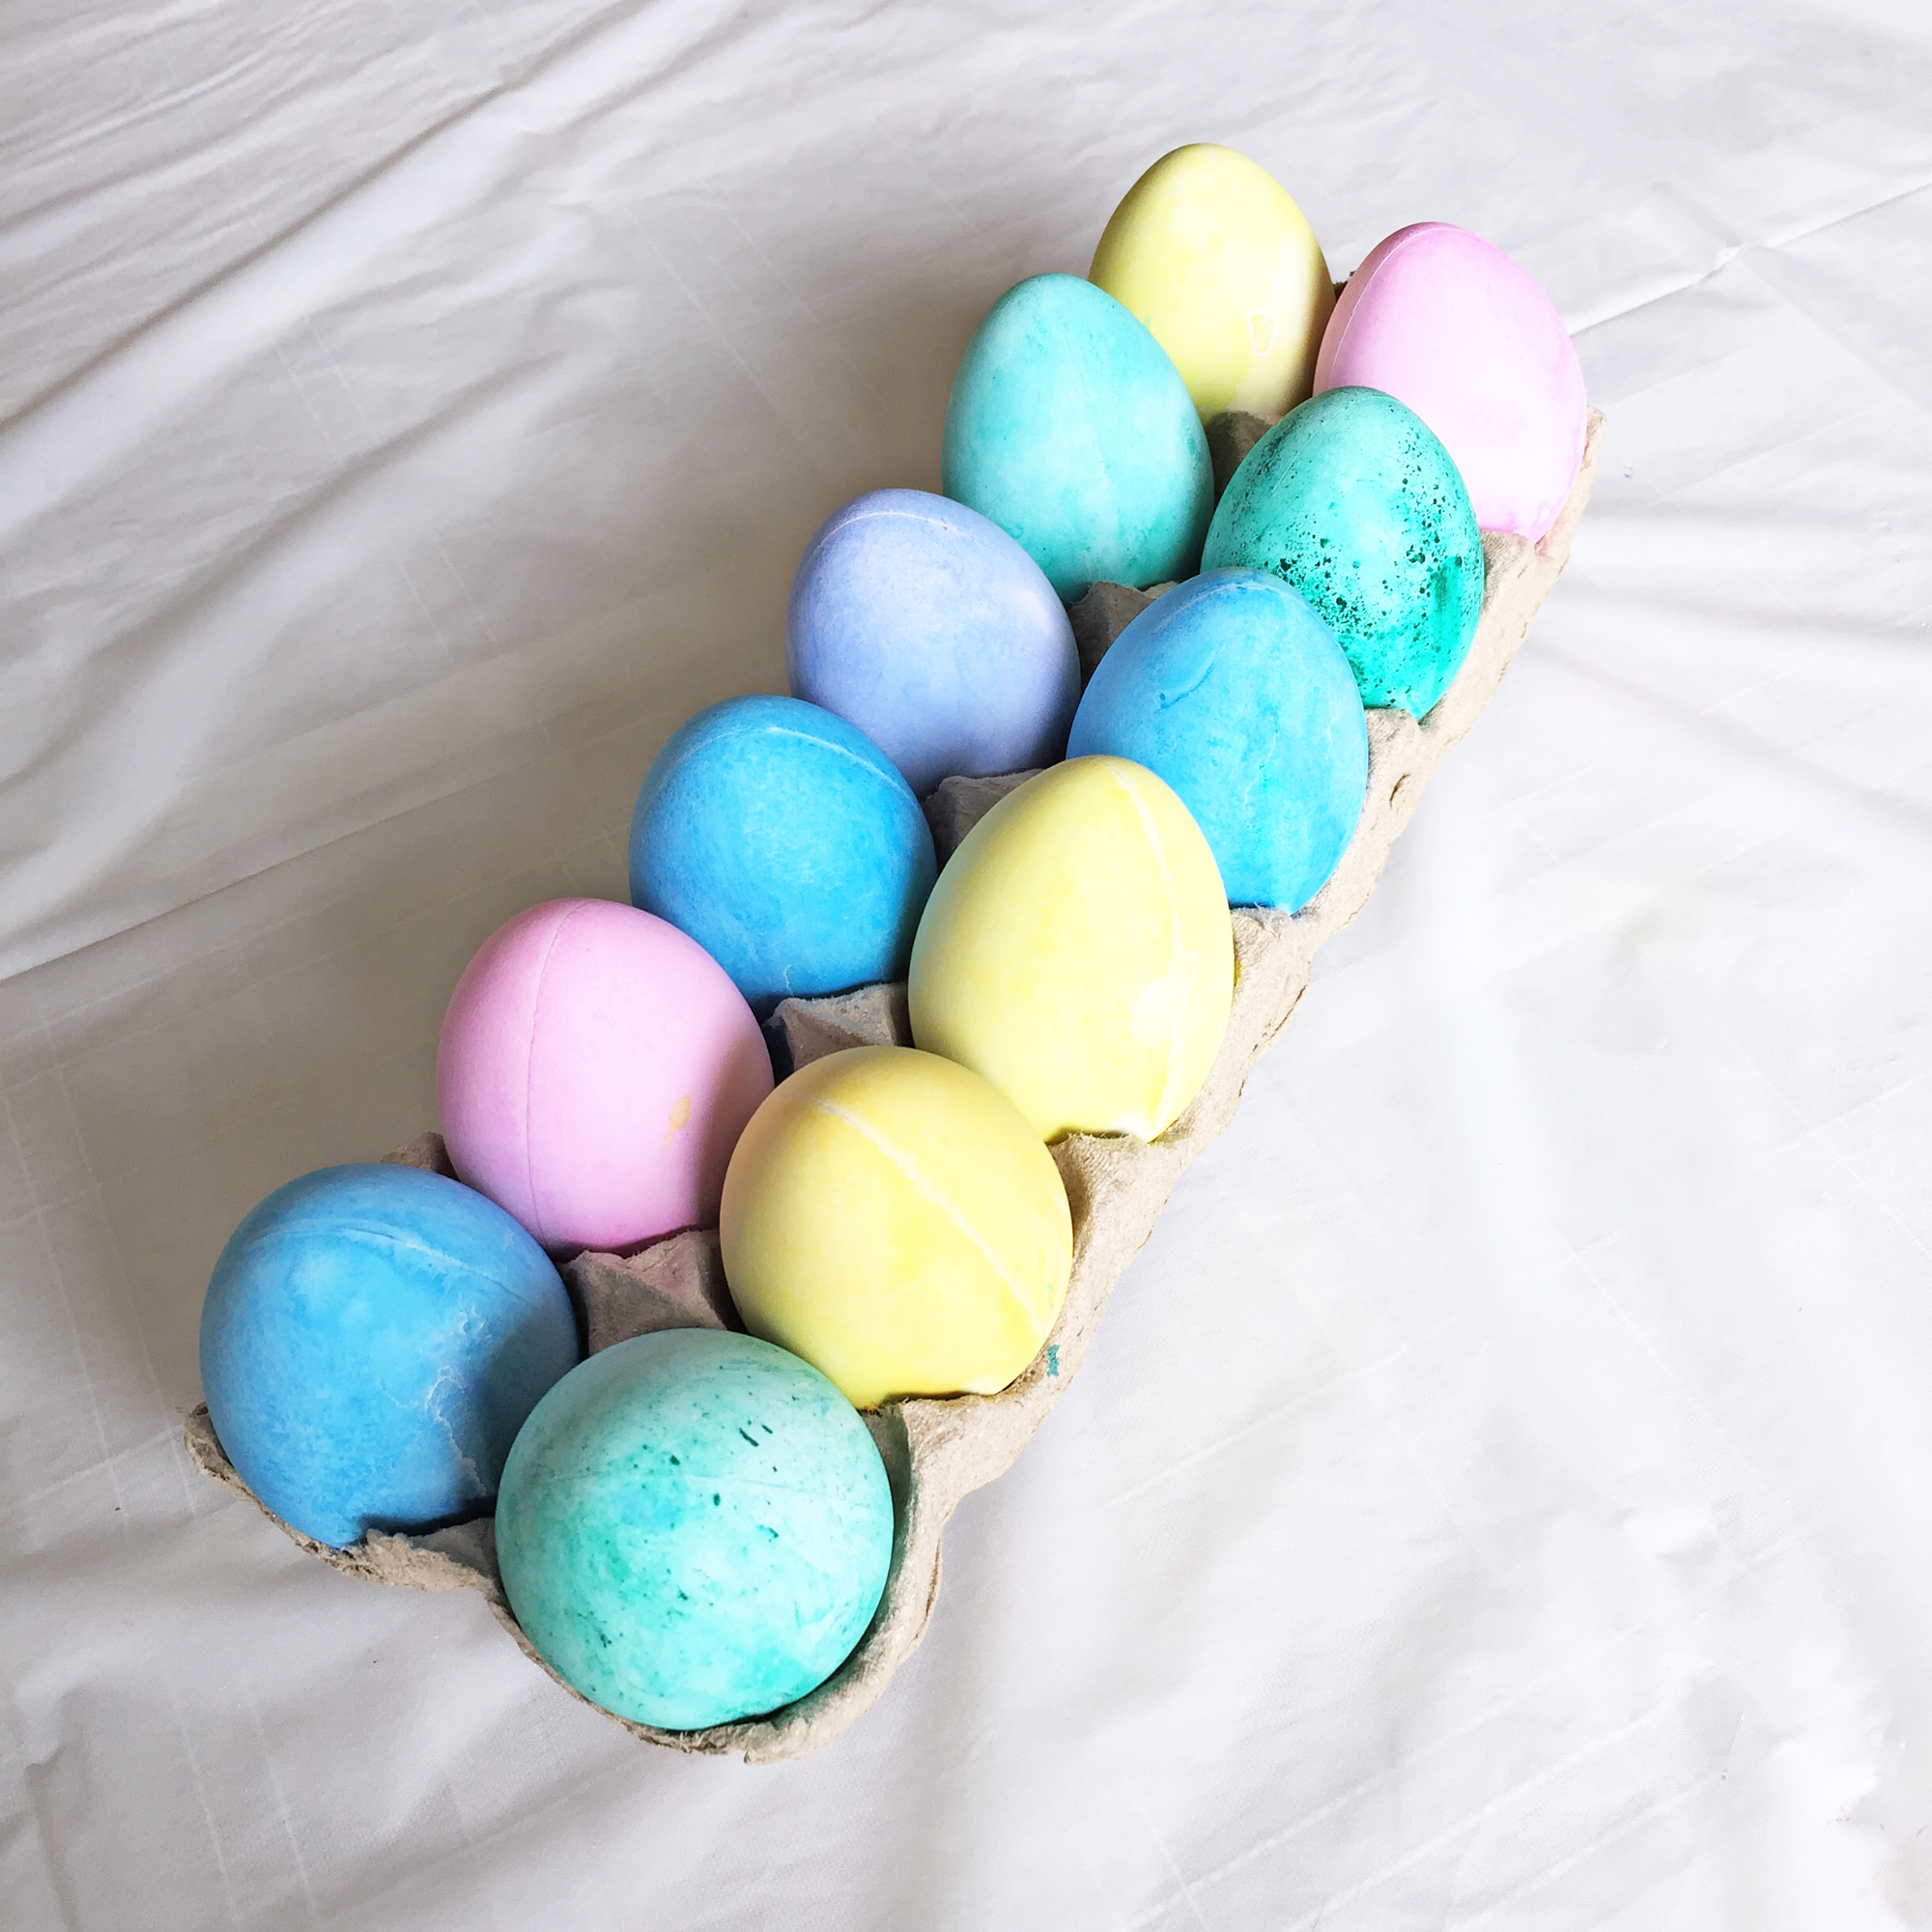 Vegan Easter Eggs Dyeing